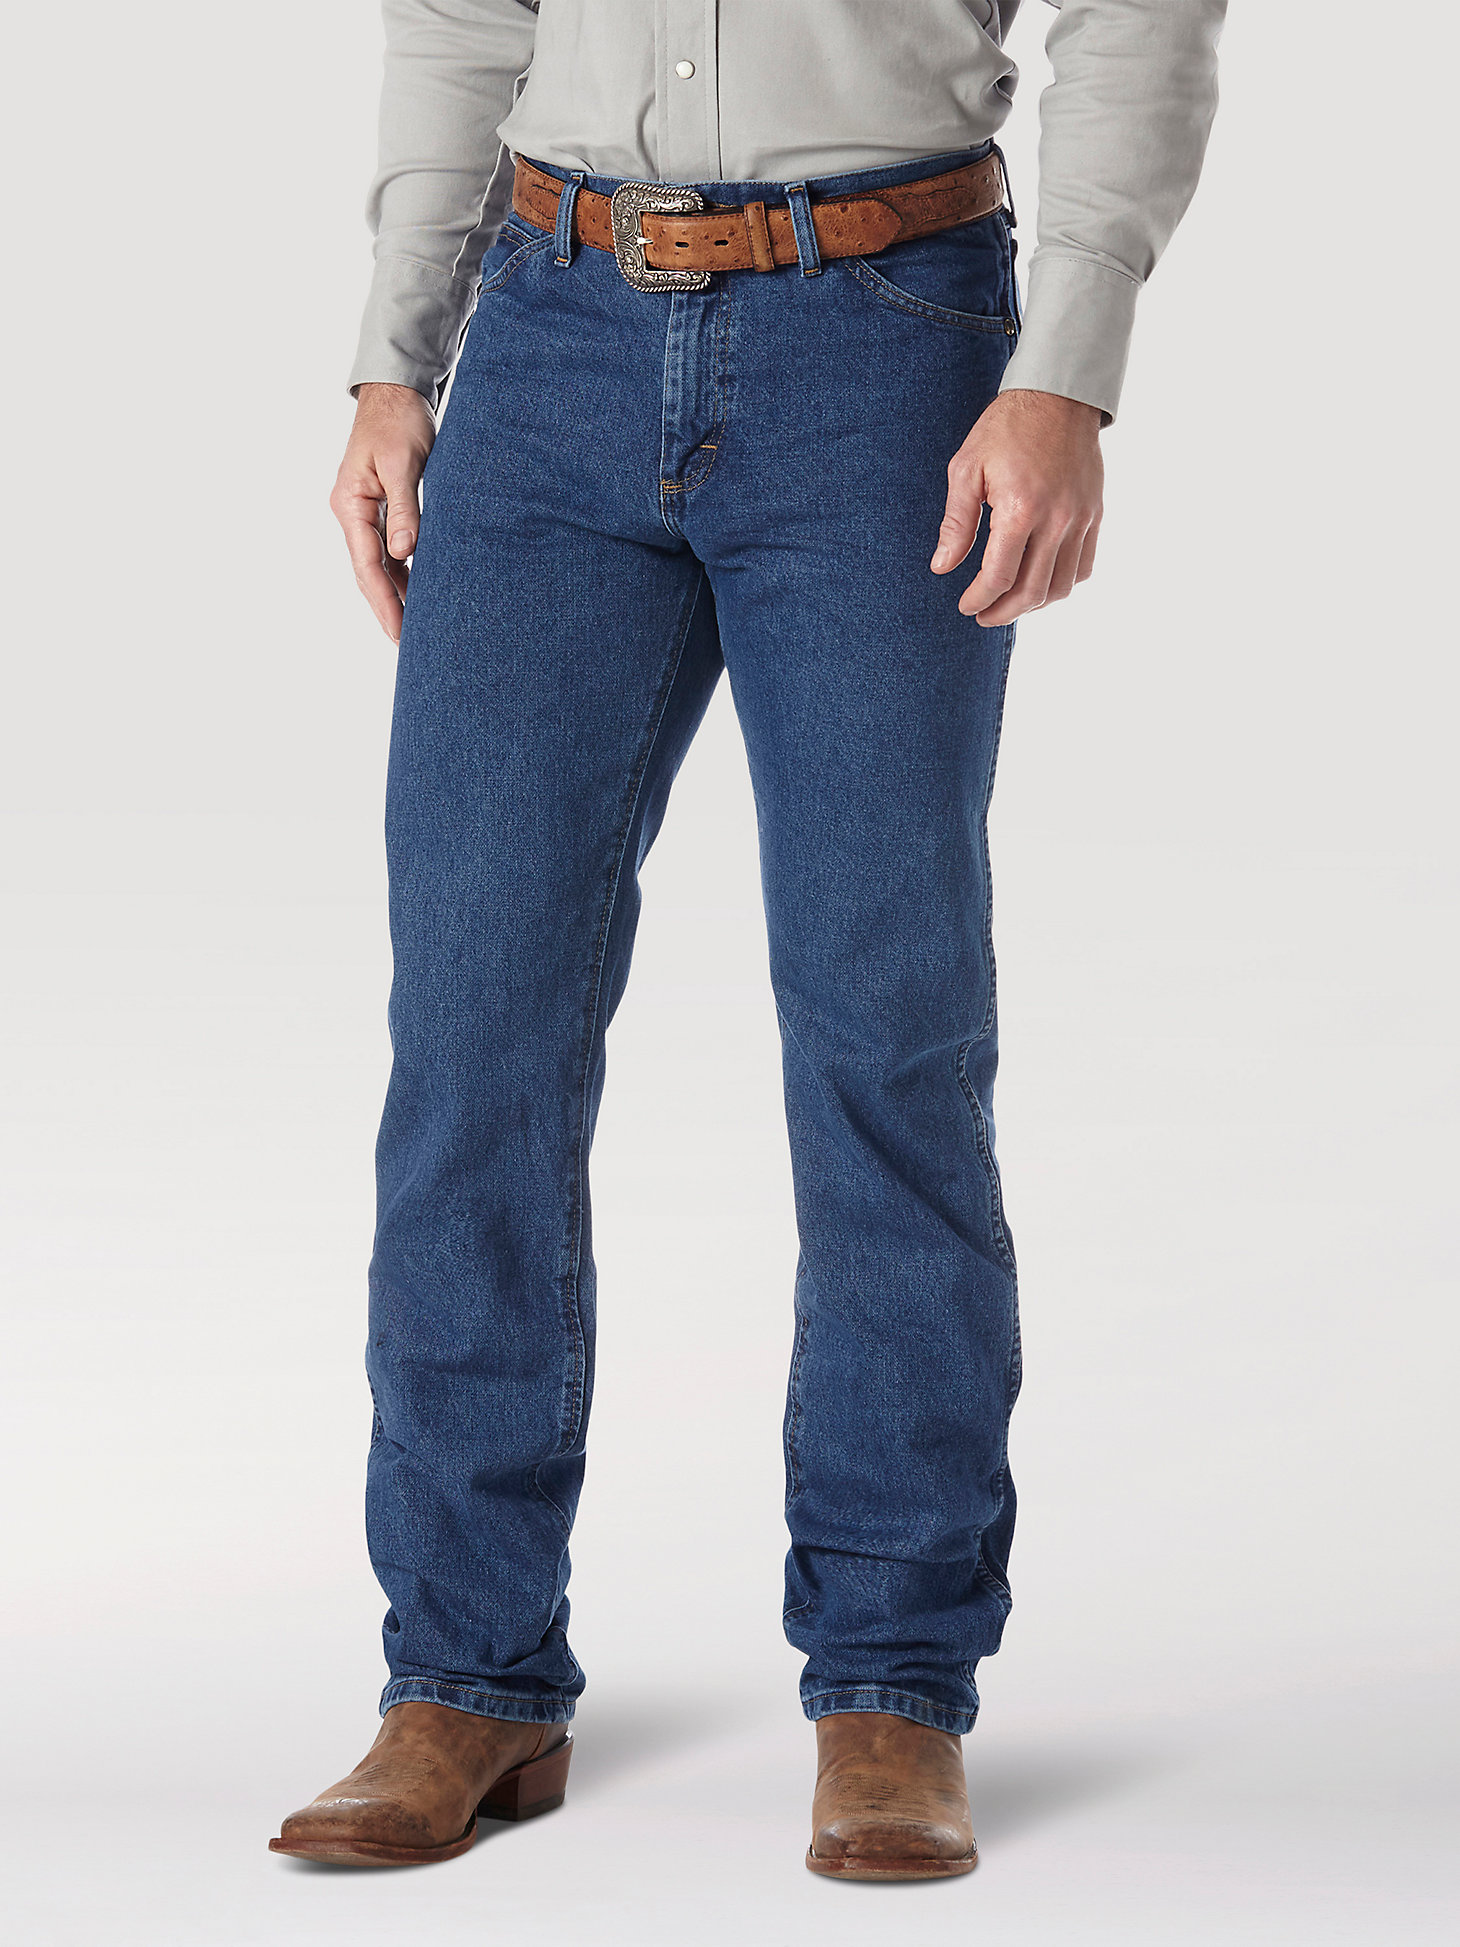 Premium Performance Cowboy Cut® Regular Fit Jean in Dark Stone alternative view 1